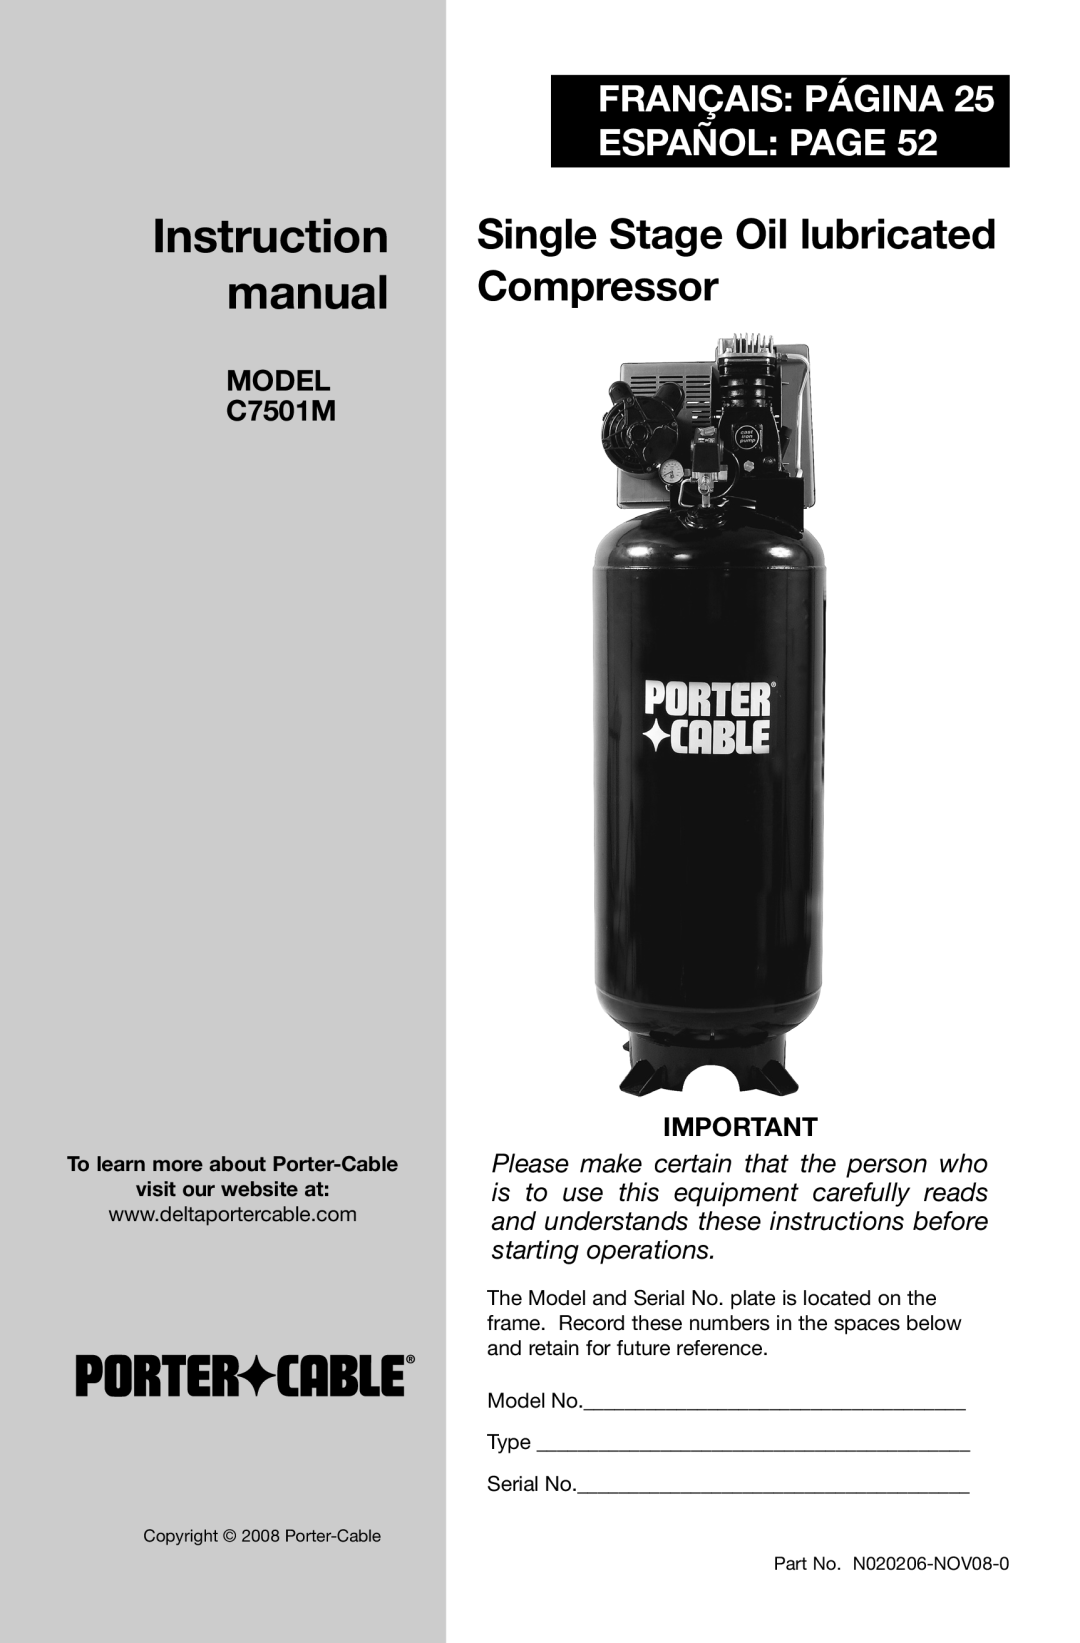 Porter-Cable C7501M instruction manual Instruction, Français Página, Español Page, Model, Single Stage Oil lubricated 